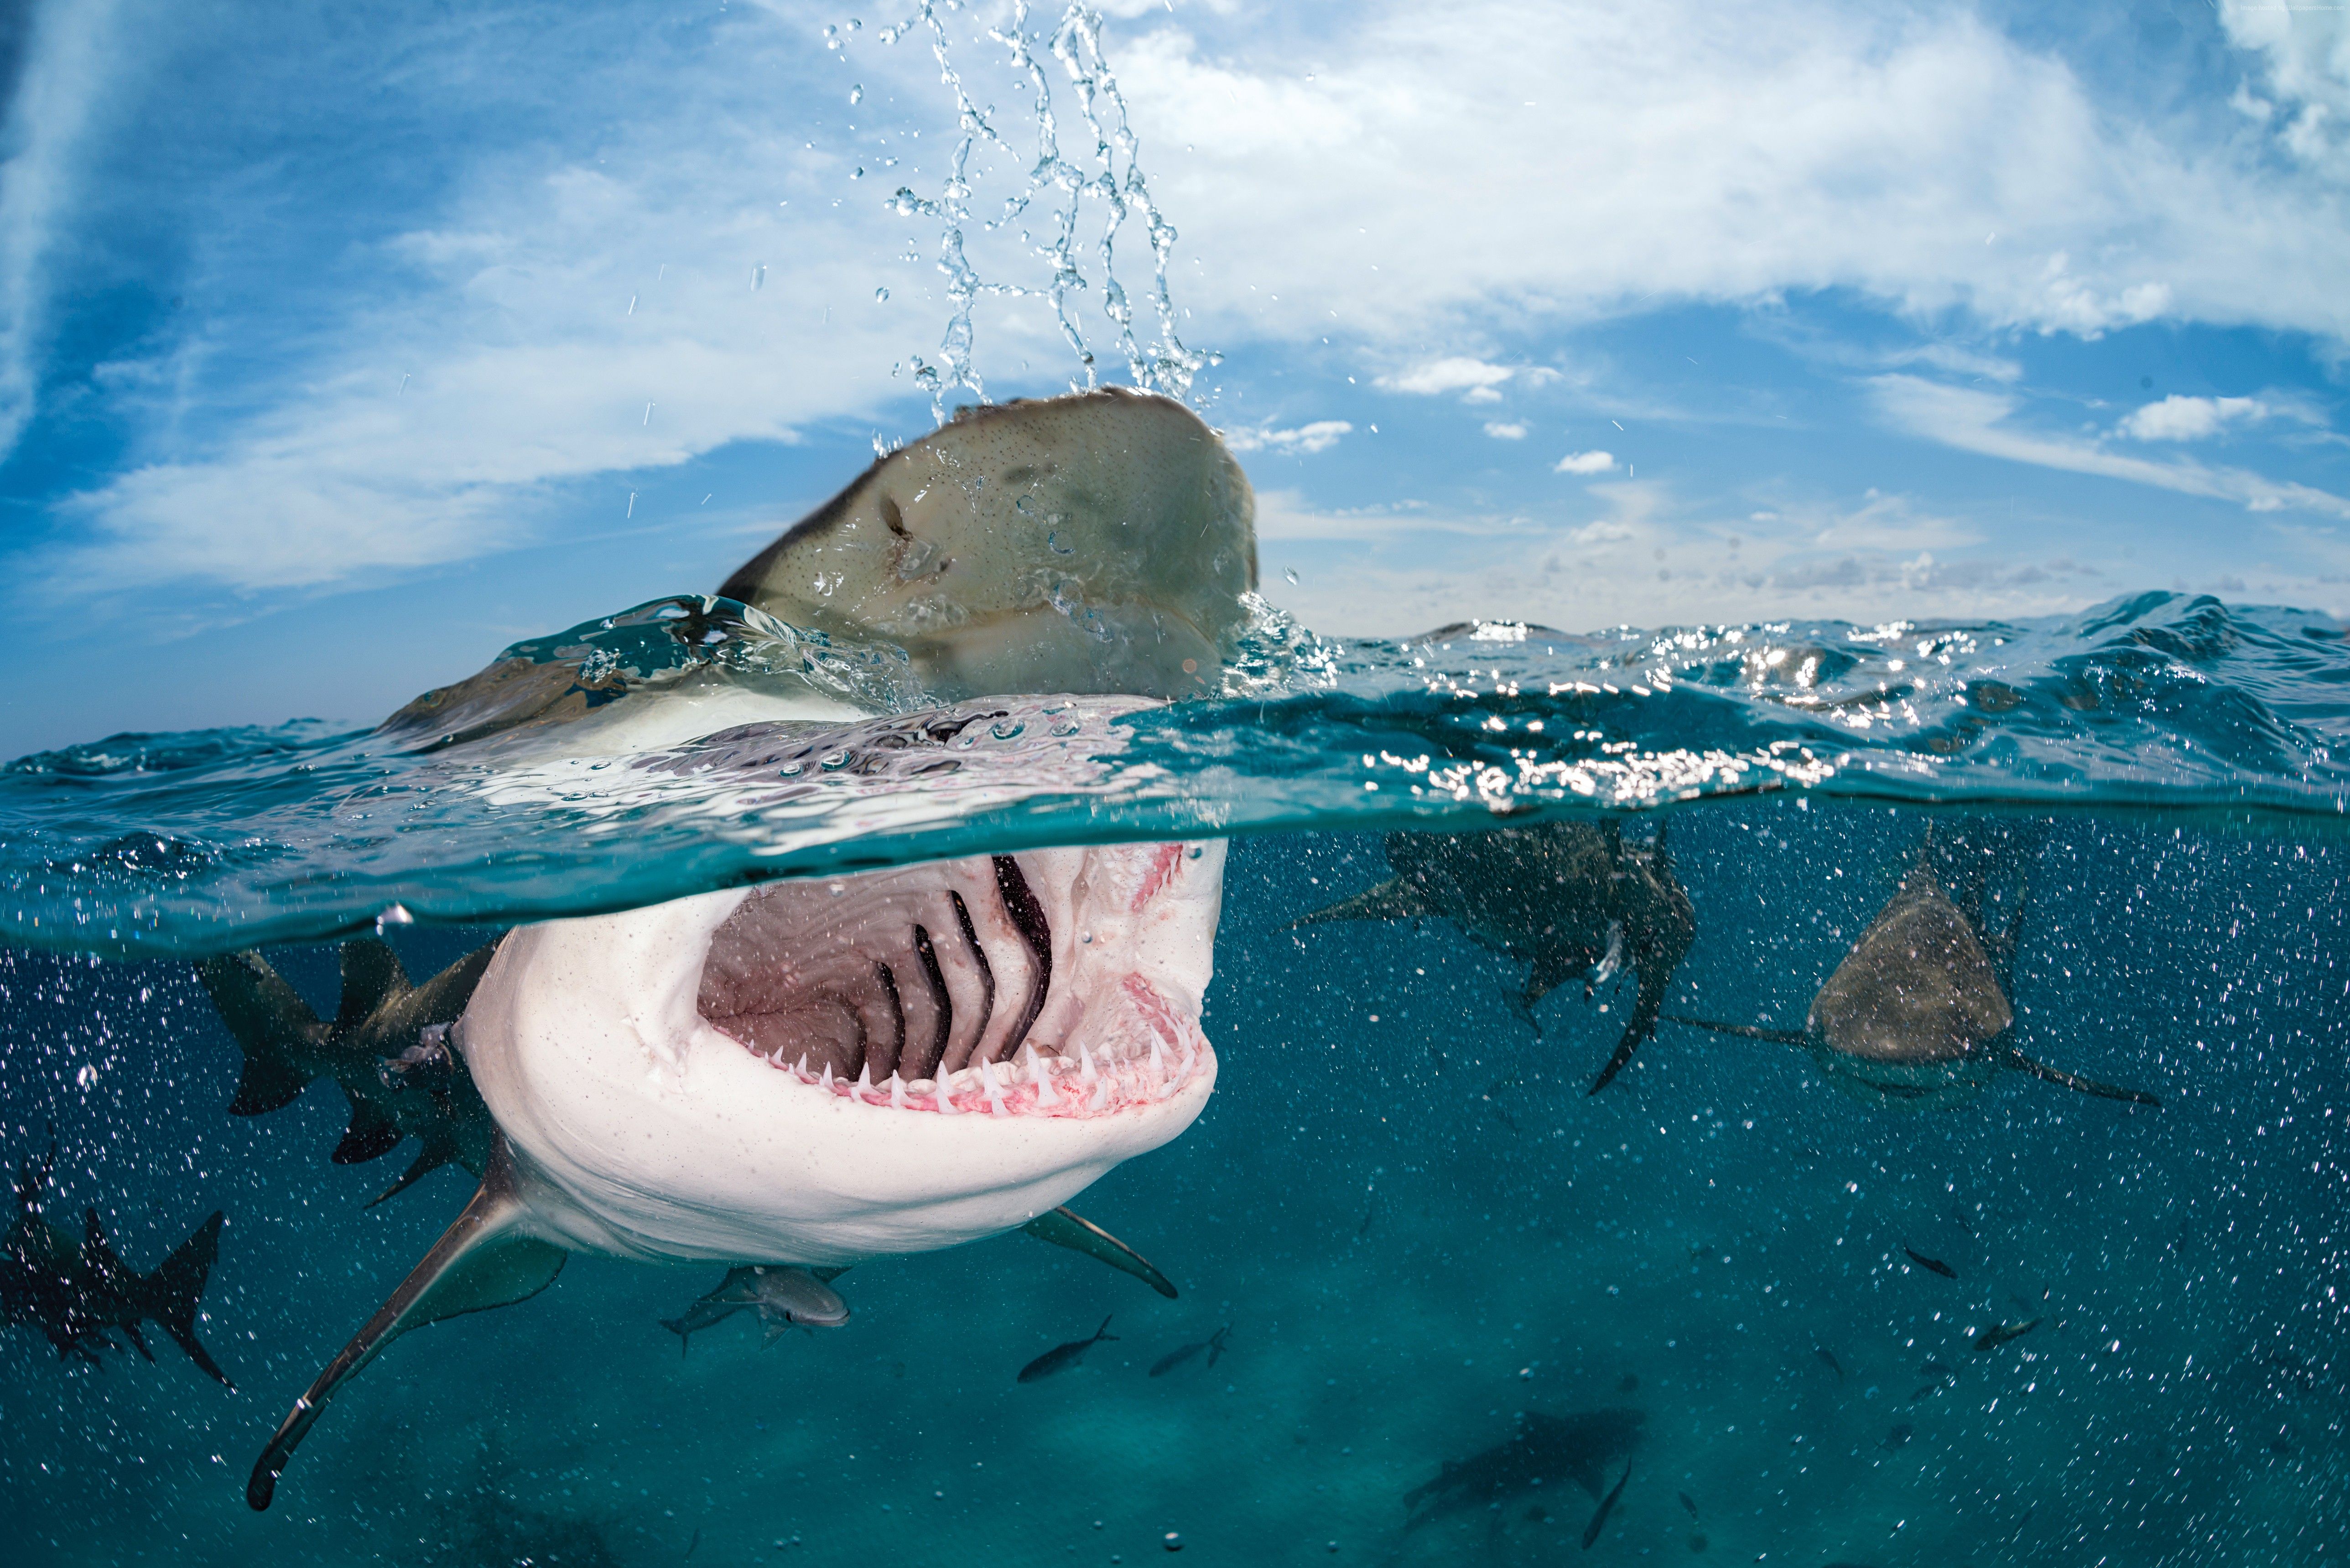 4k Wallpaper Shark Indian Caribbean Atlantic Ocean Wallpaper